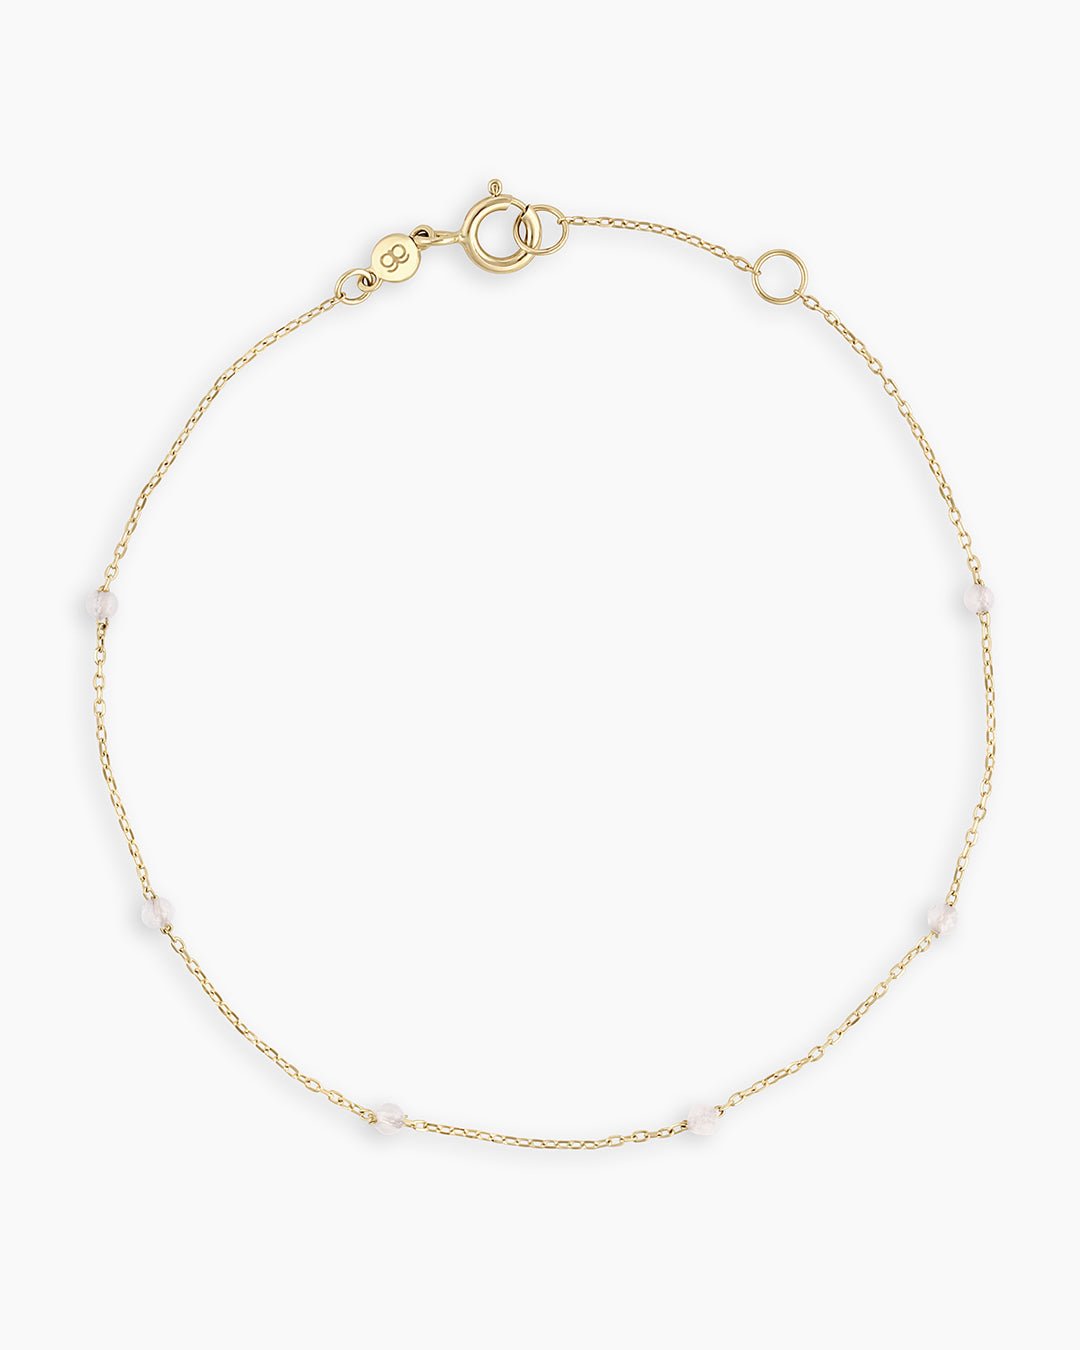 White TopazNewport Bracelet || option::14k Solid Gold, White Topaz